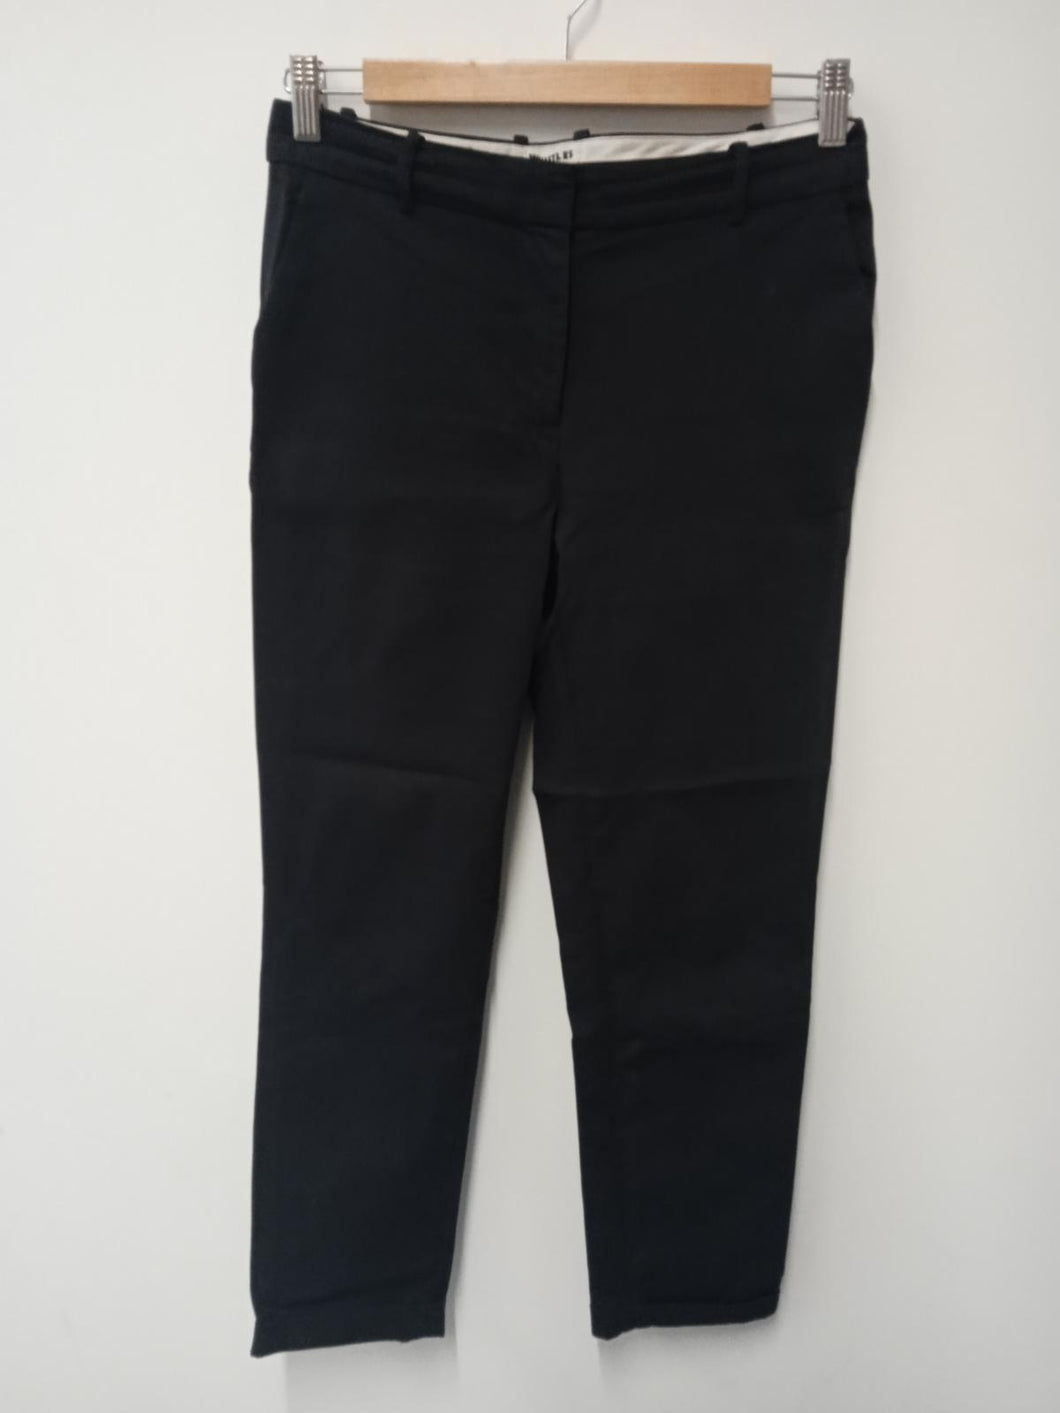 WHISTLES Ladies Black Zip Fly Trousers Size UK10